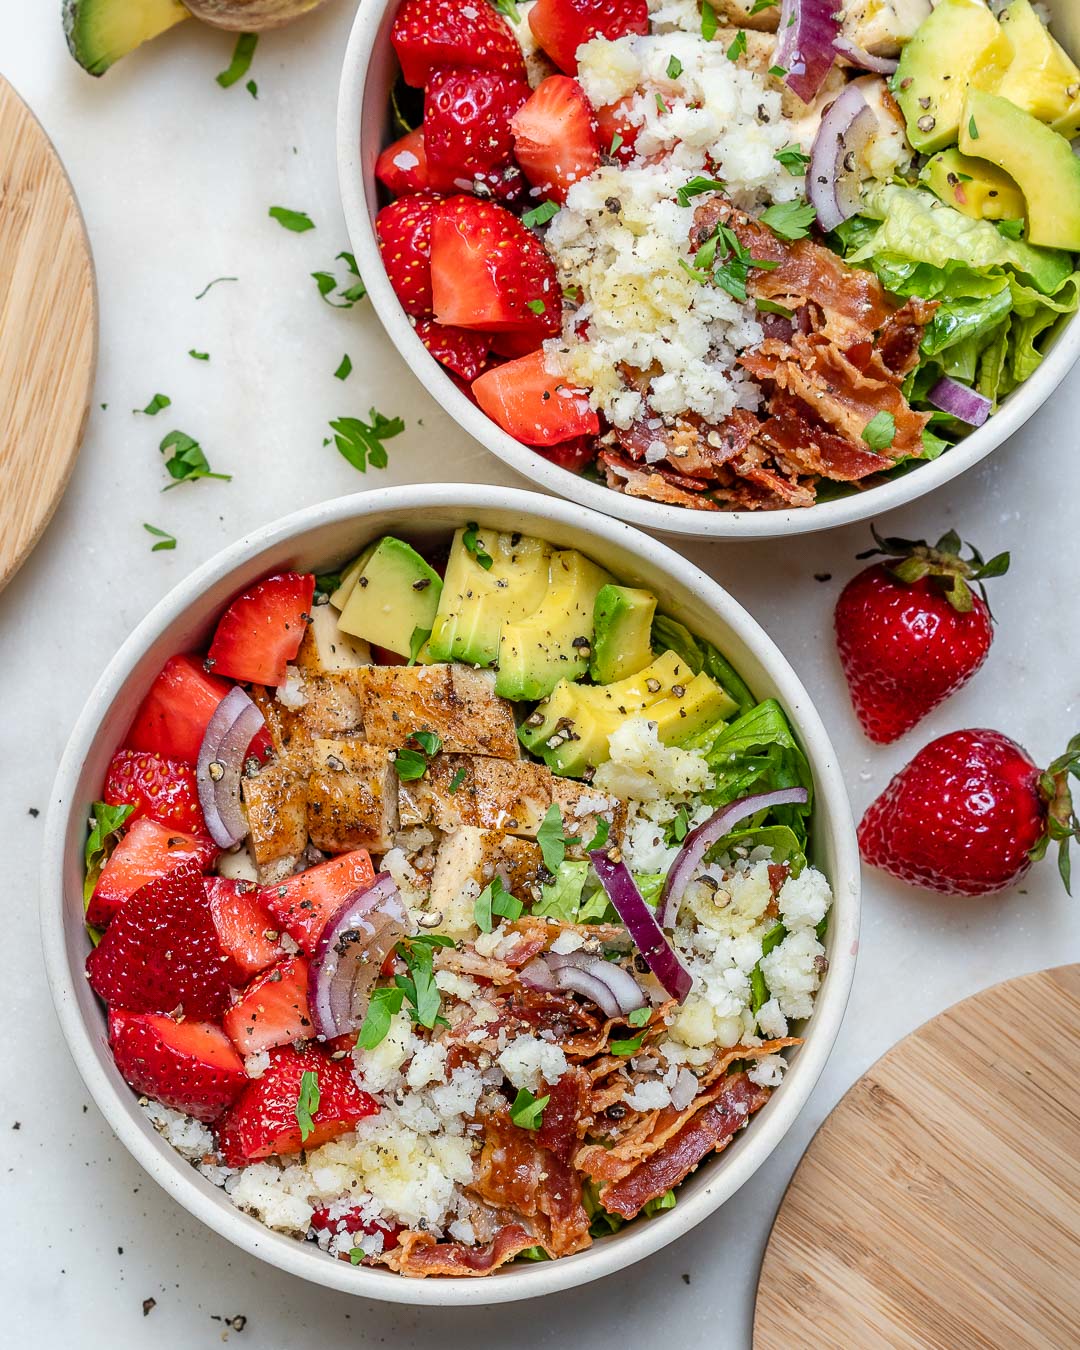 https://cleanfoodcrush.com/wp-content/uploads/2019/06/Healthy-Chicken-Strawberry-Salad-Bowls.jpg